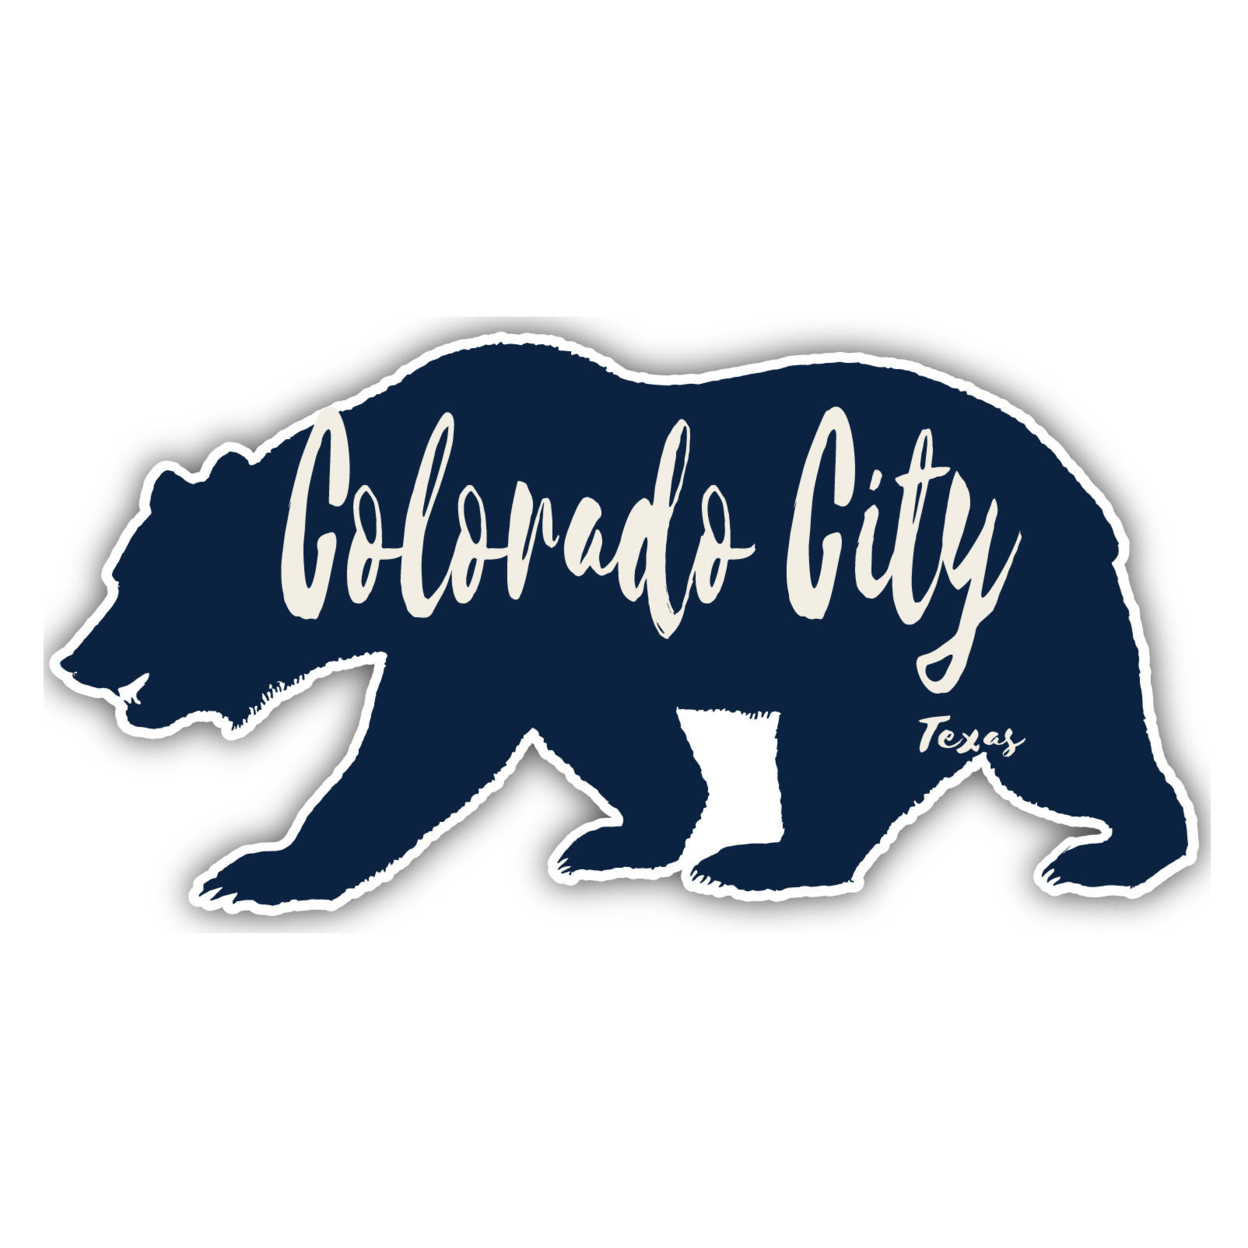 Colorado City Texas Souvenir Decorative Stickers (Choose Theme And Size) - Single Unit, 10-Inch, Bear